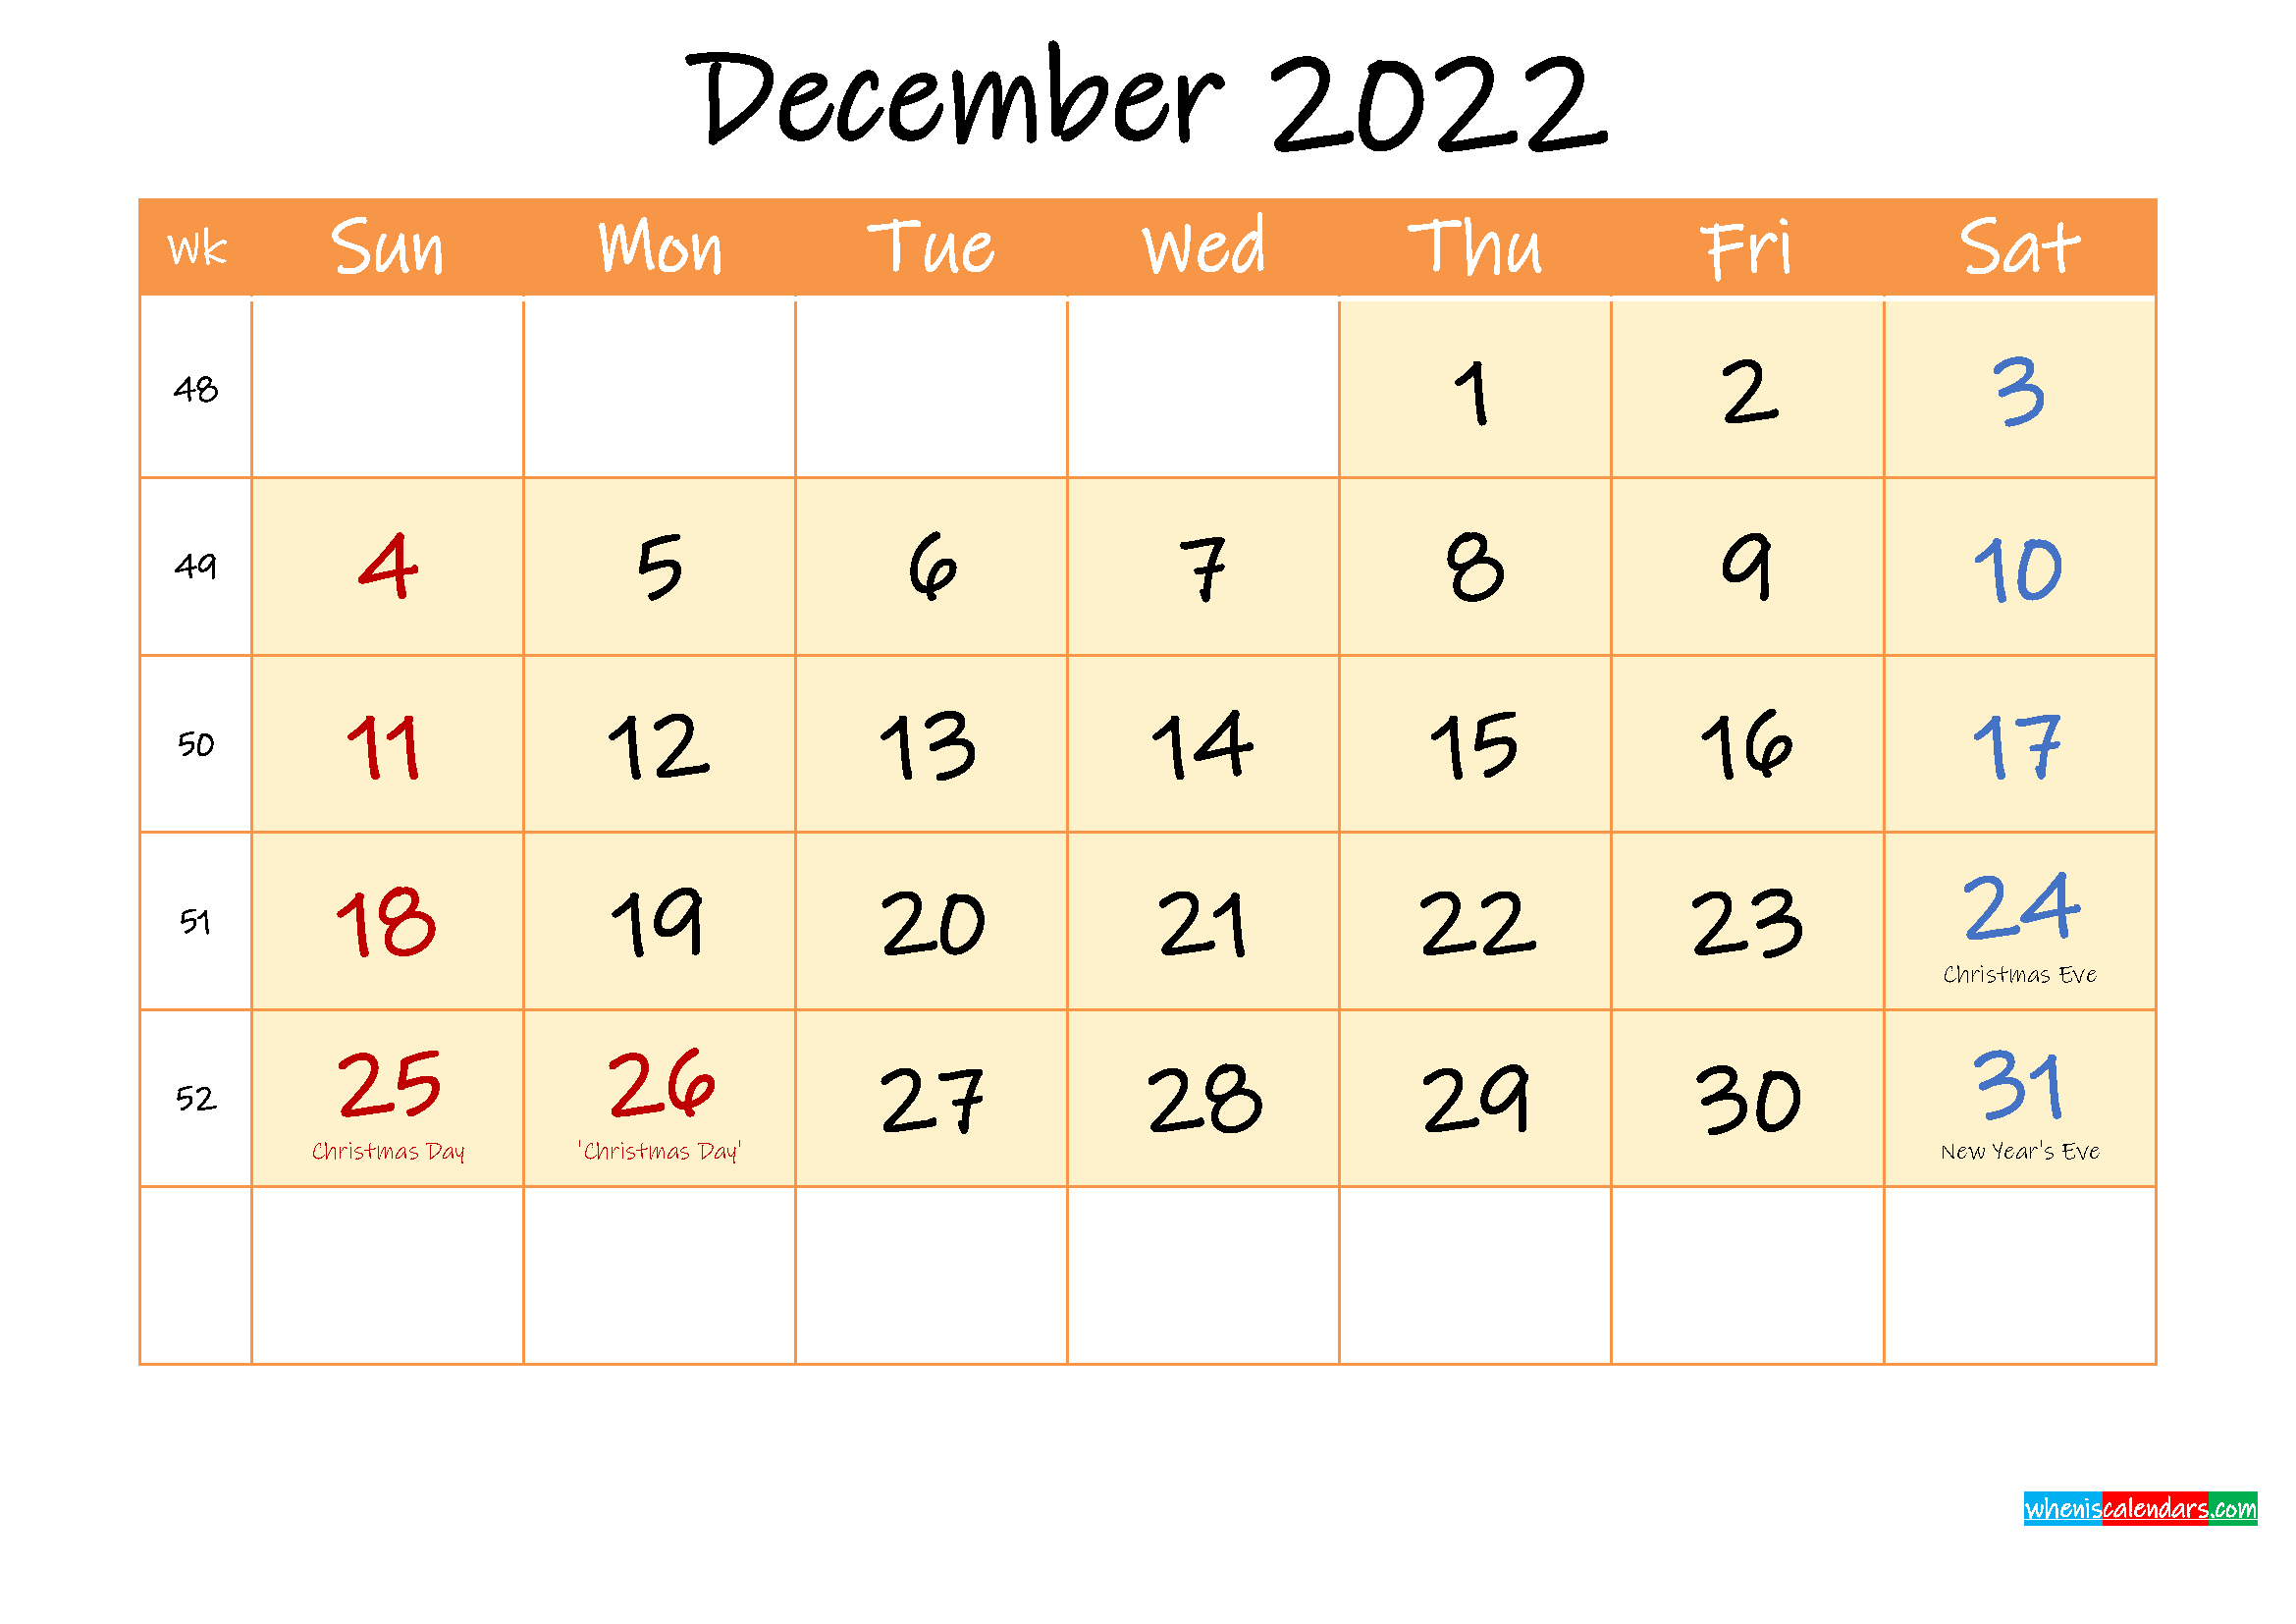 December 2022 Free Printable Calendar - Template Ink22M168 December 2022 Printable Calendar With Holidays